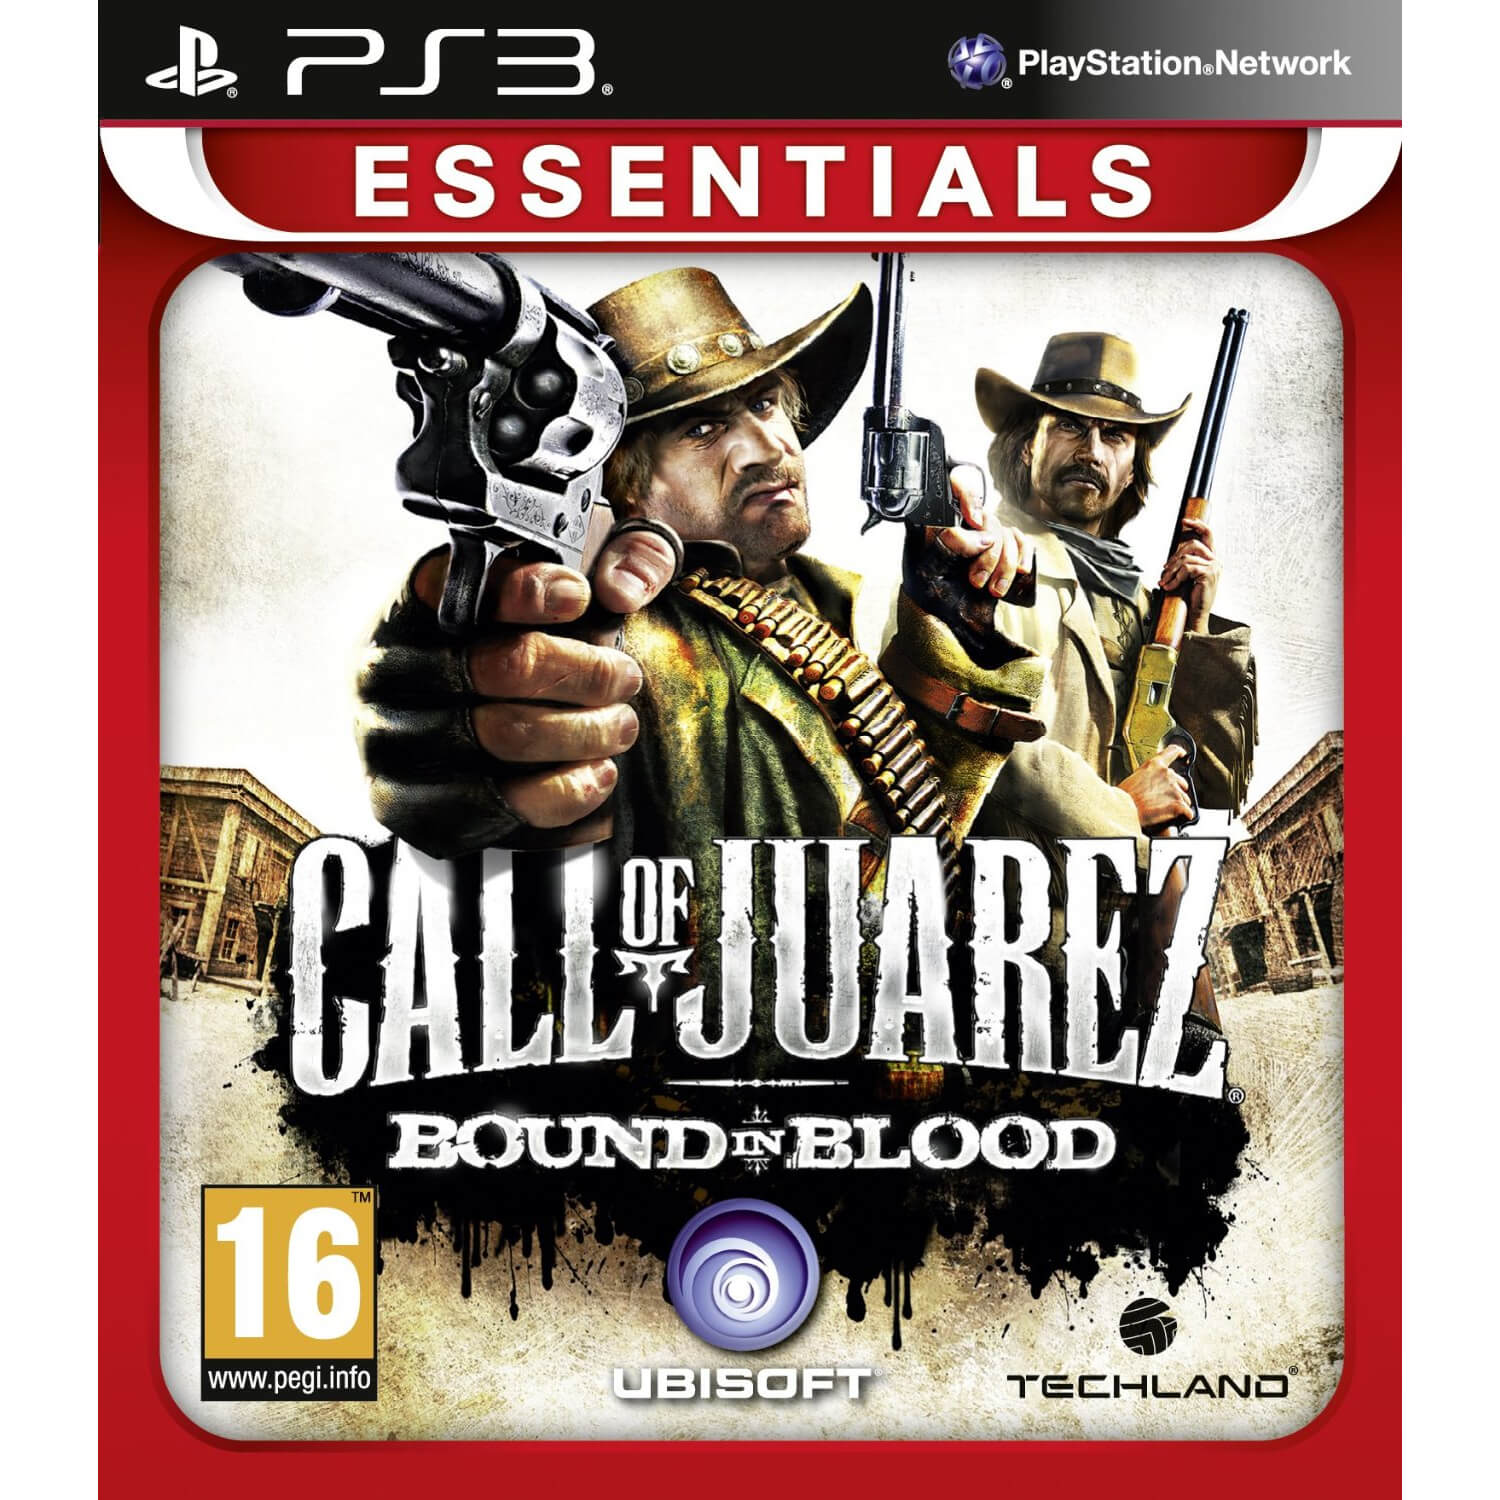  Joc PS3 Call of Juarez: Bound in Blood (Essentials) 